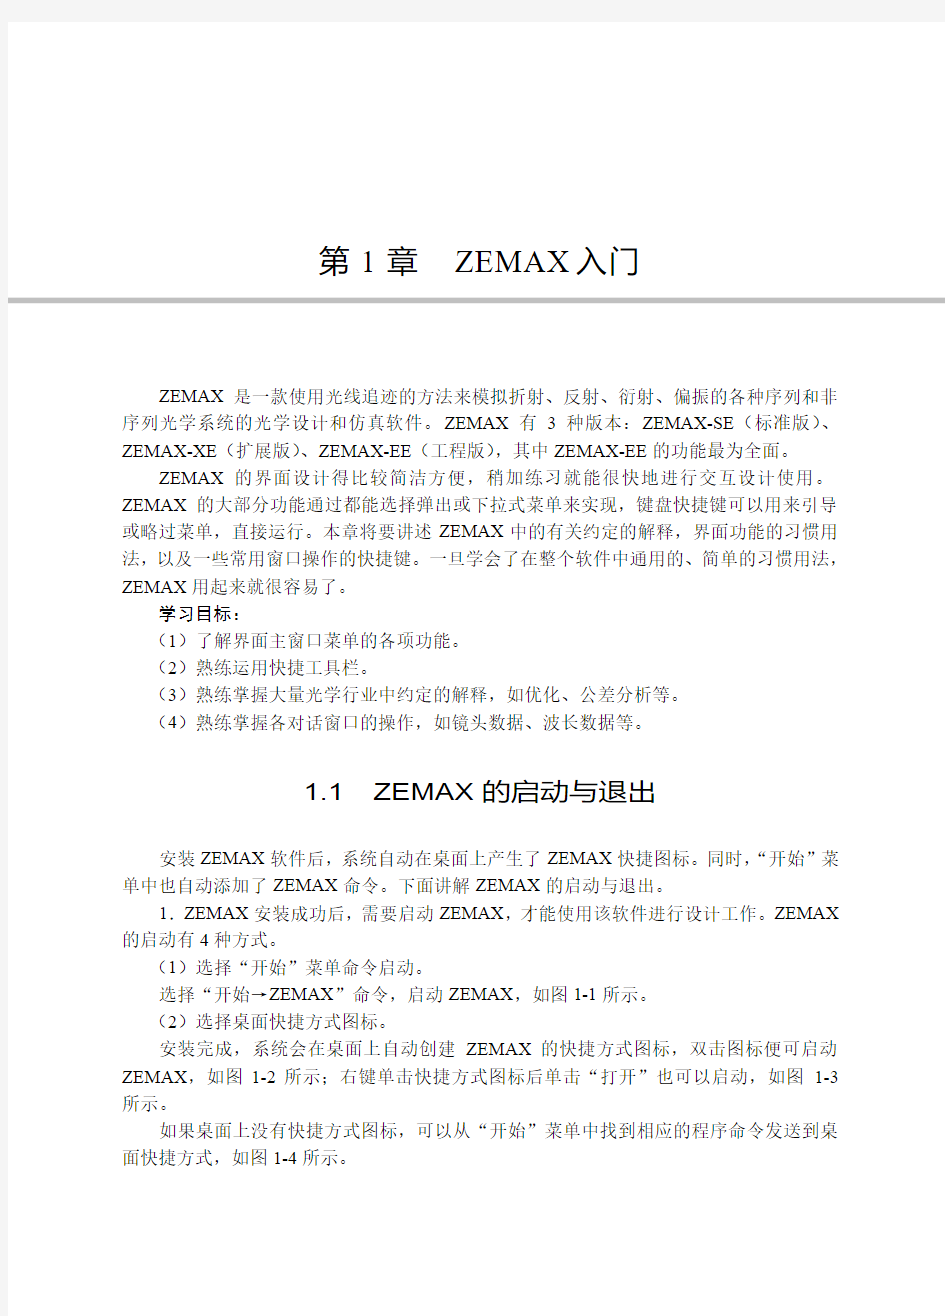 ZEMAX光学设计超级学习手册-第1章